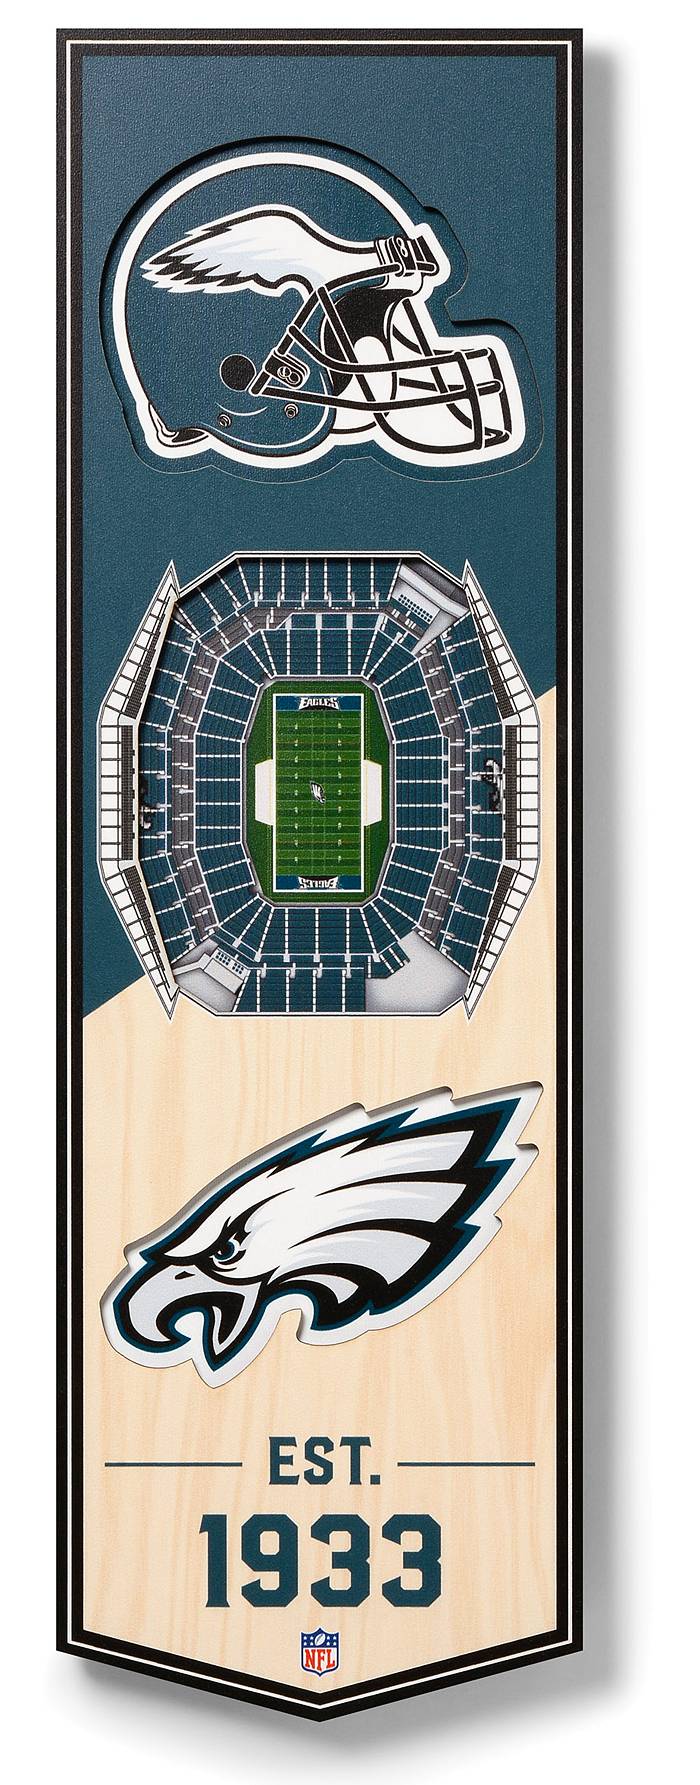 YouTheFan 954132 6 x 19 in. NFL Philadelphia Eagles 3D Stadium Banner - Lincoln Financial Field